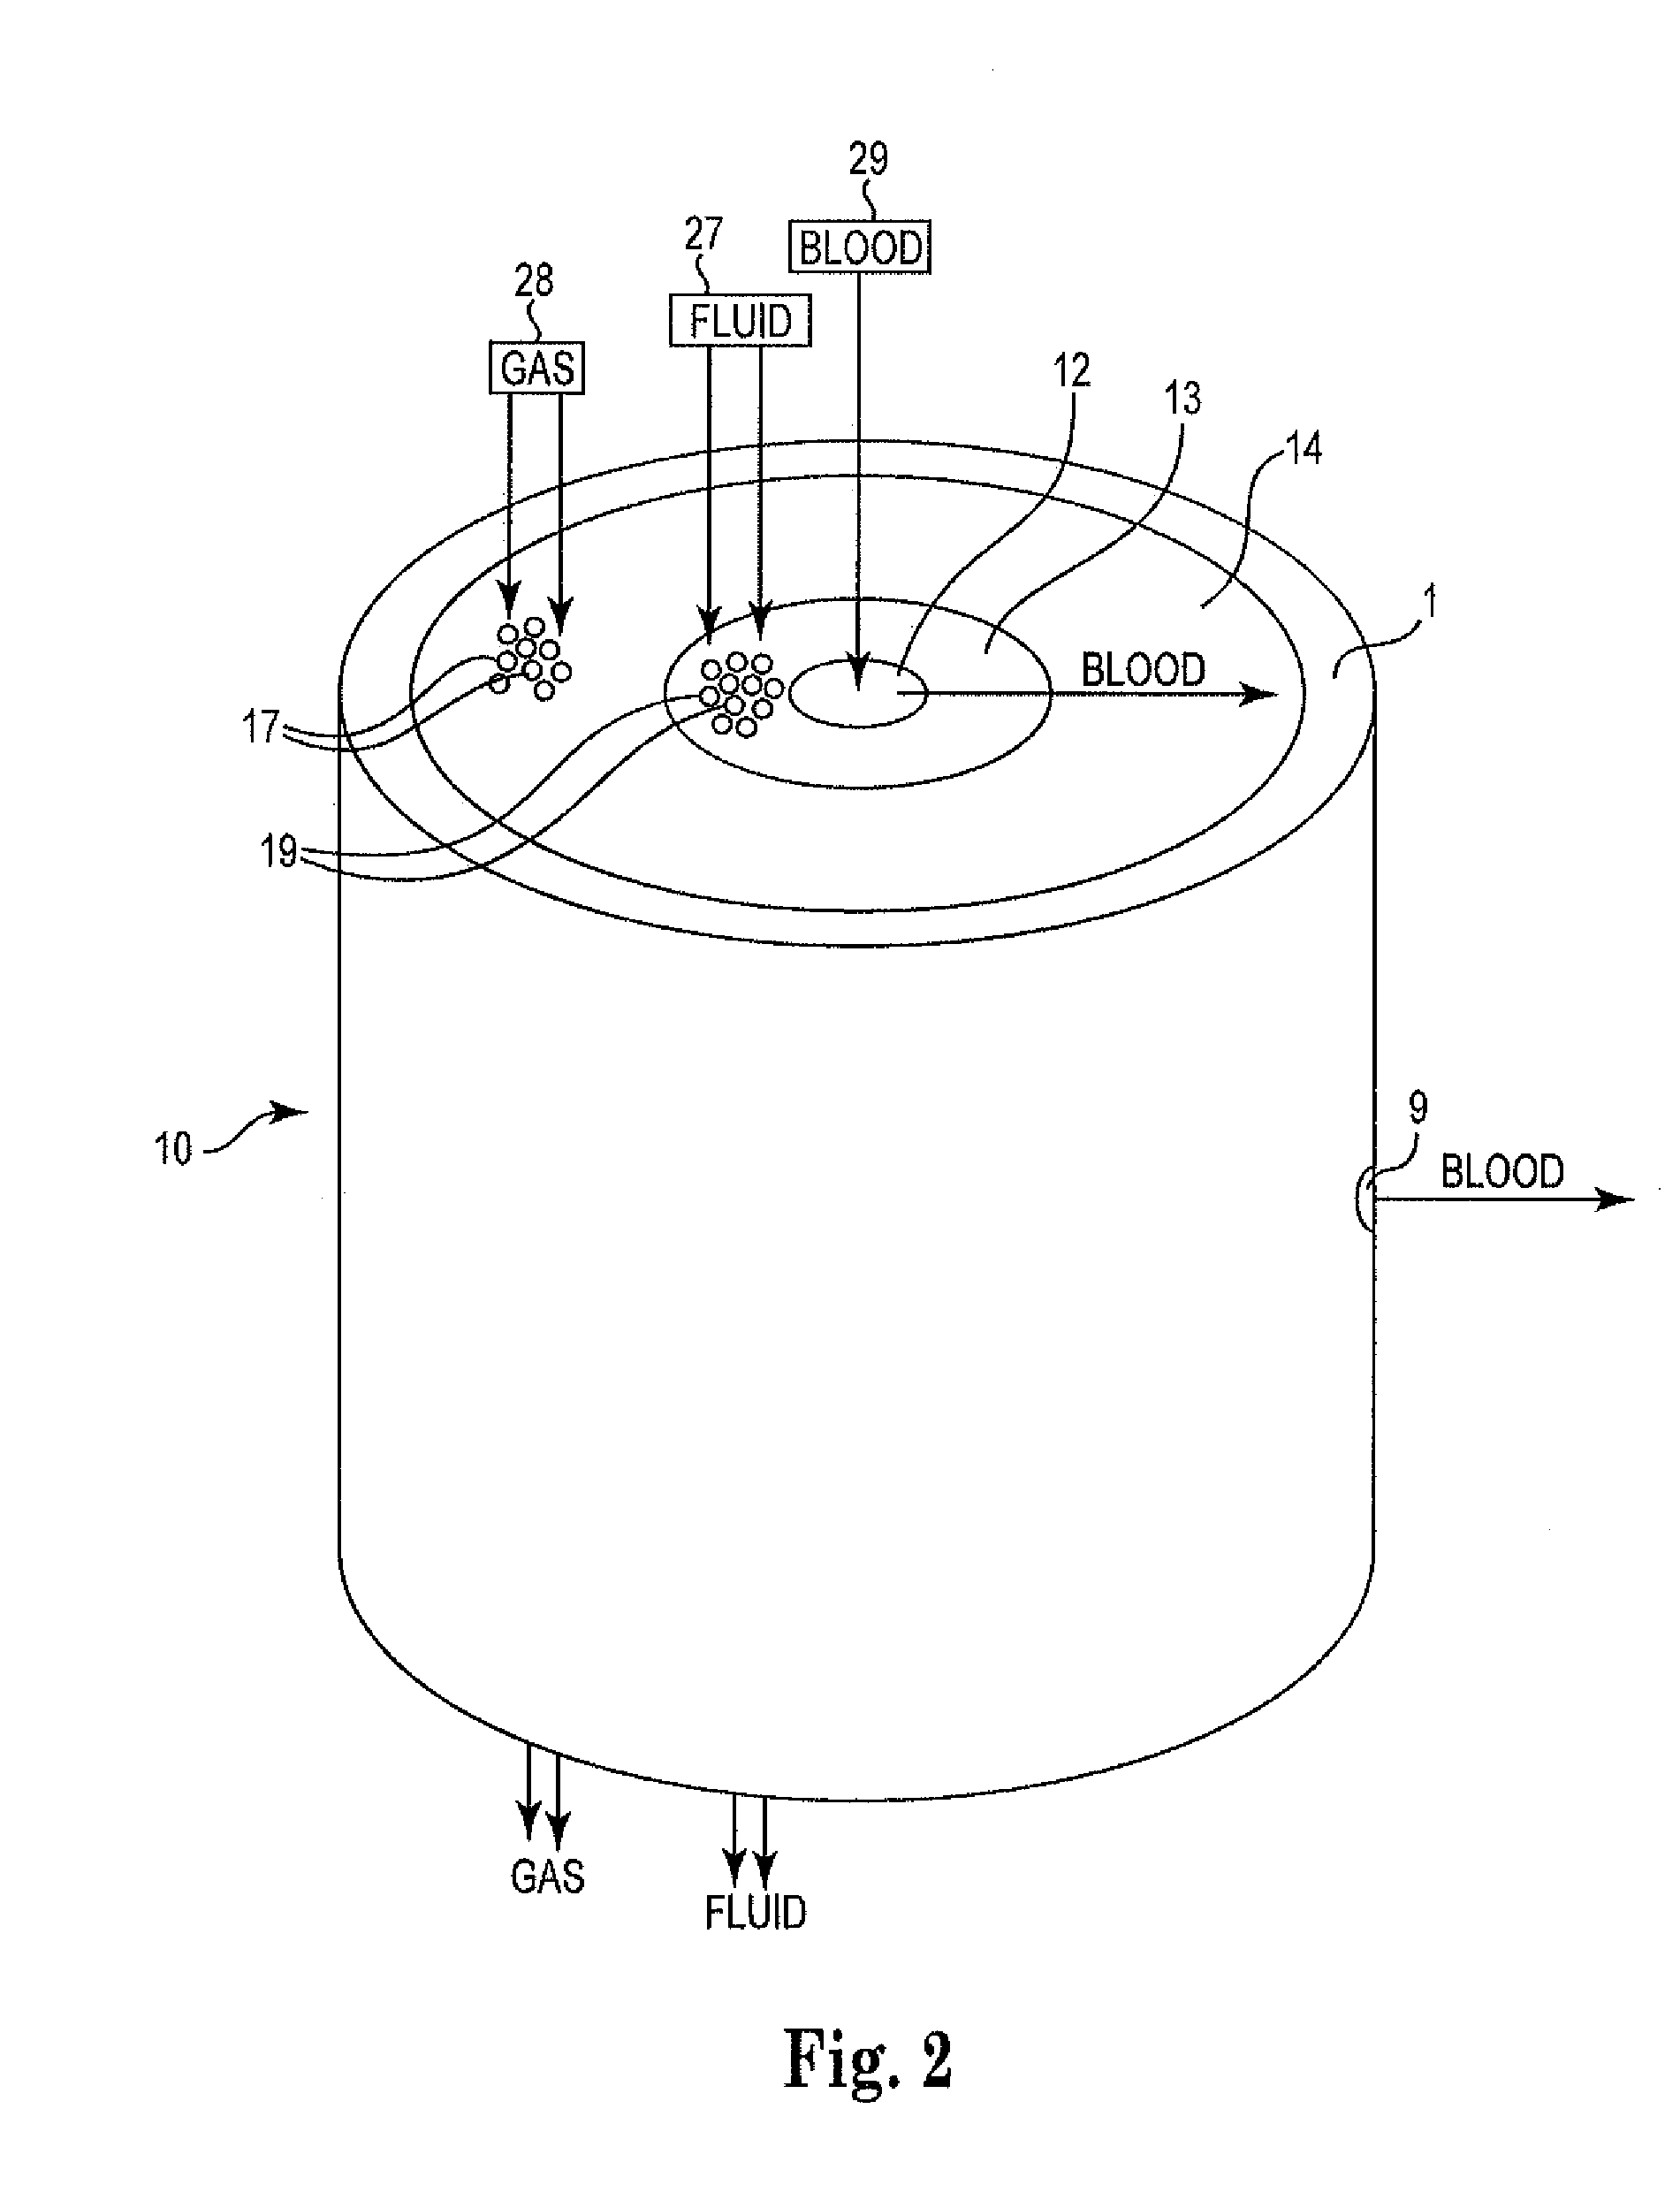 Method of making radial design oxygenator with heat exchanger